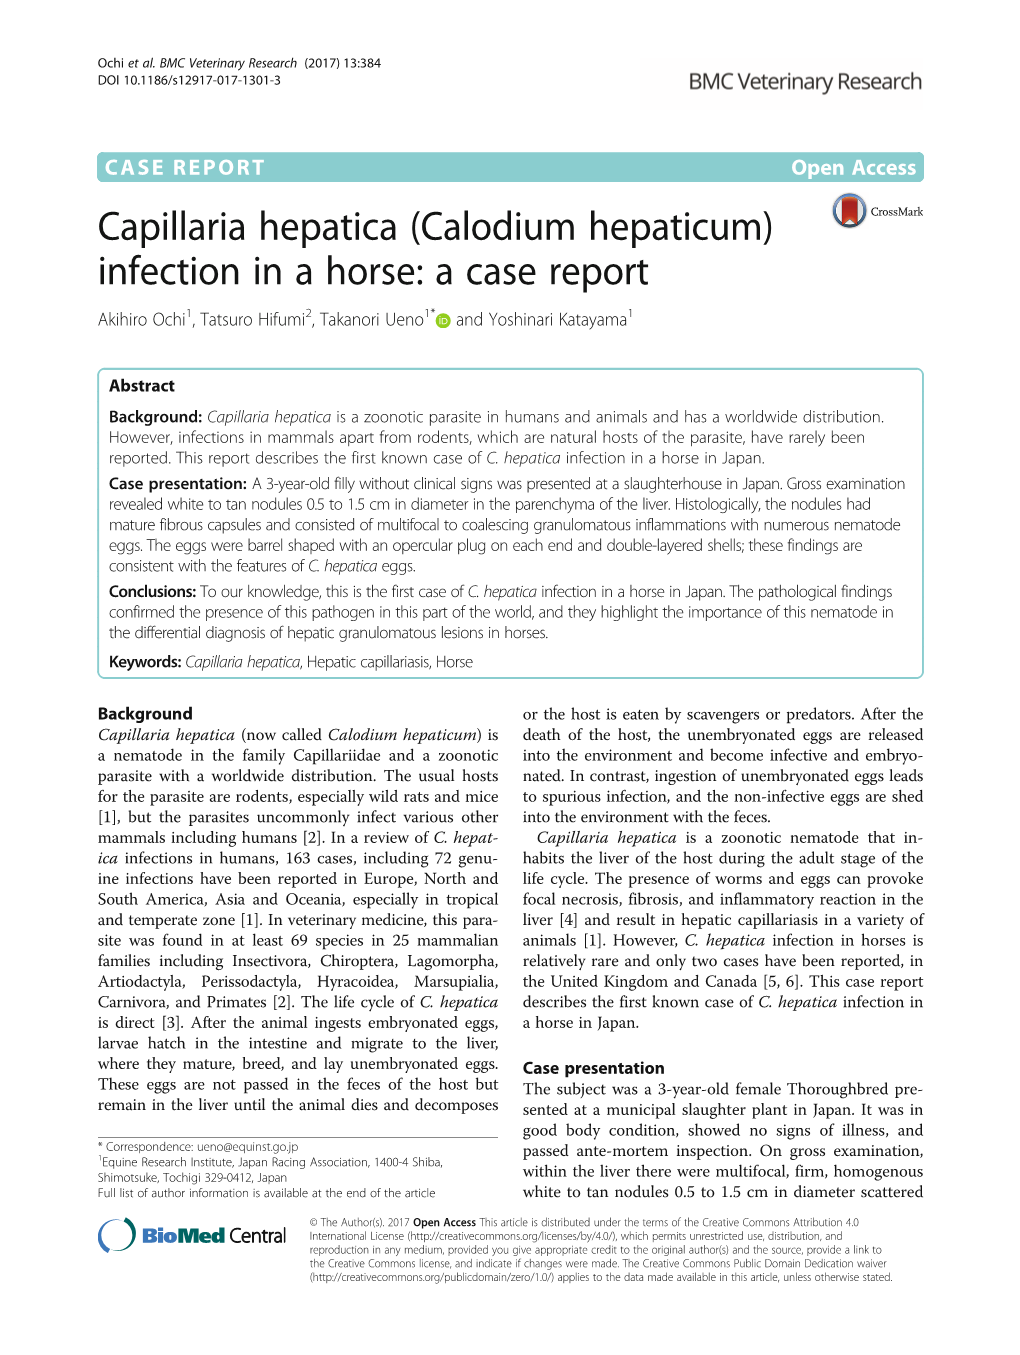 Capillaria Hepatica (Calodium Hepaticum) Infection in a Horse: a Case Report Akihiro Ochi1, Tatsuro Hifumi2, Takanori Ueno1* and Yoshinari Katayama1